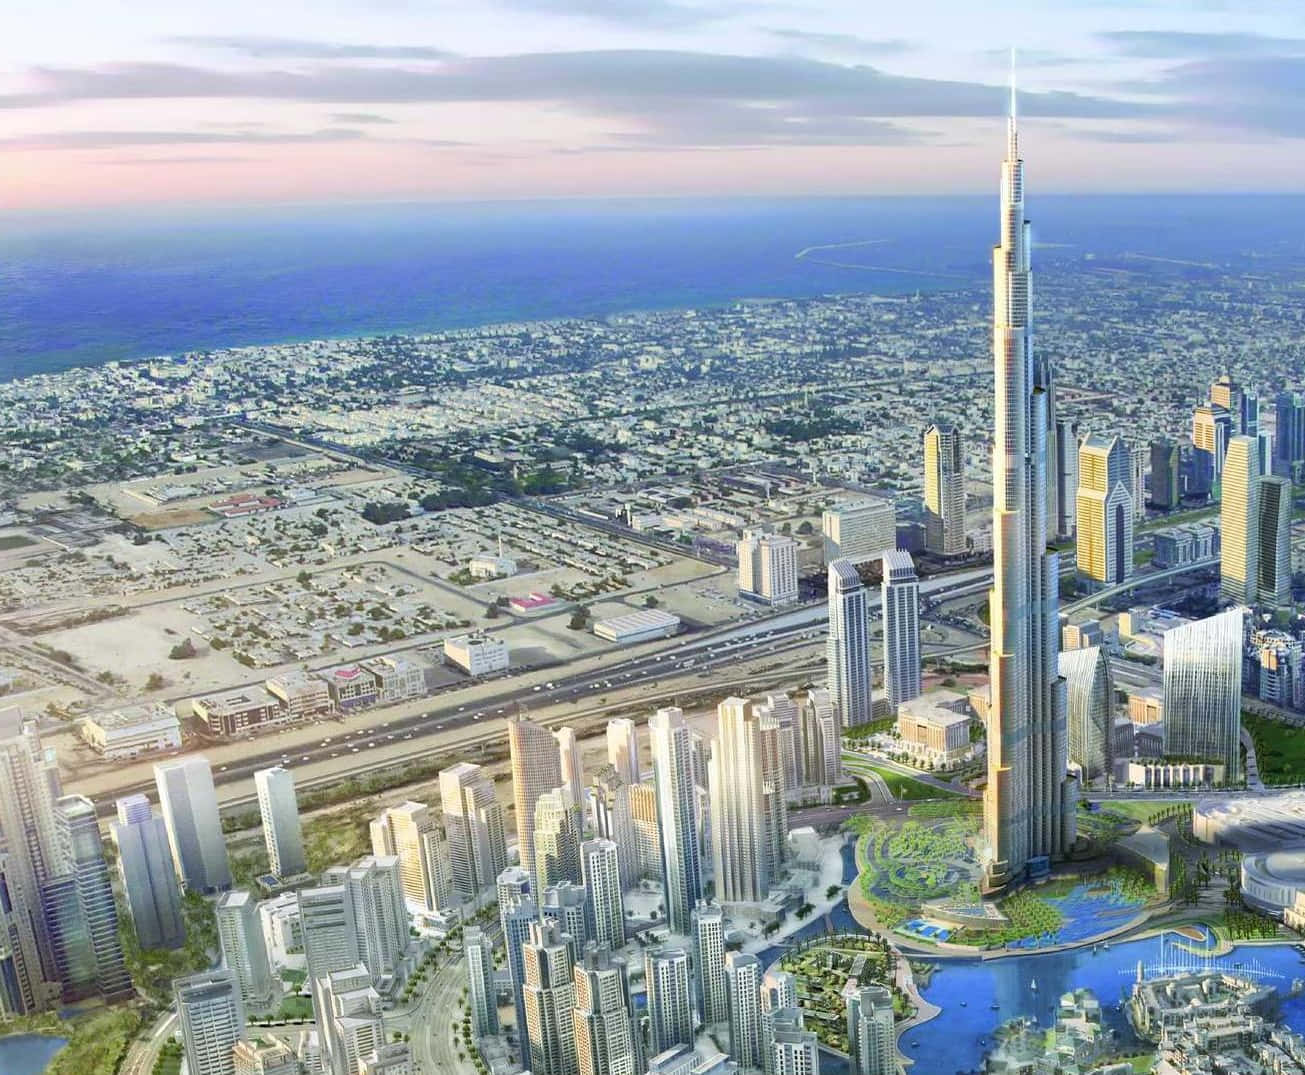 The iconic city skyline of Dubai